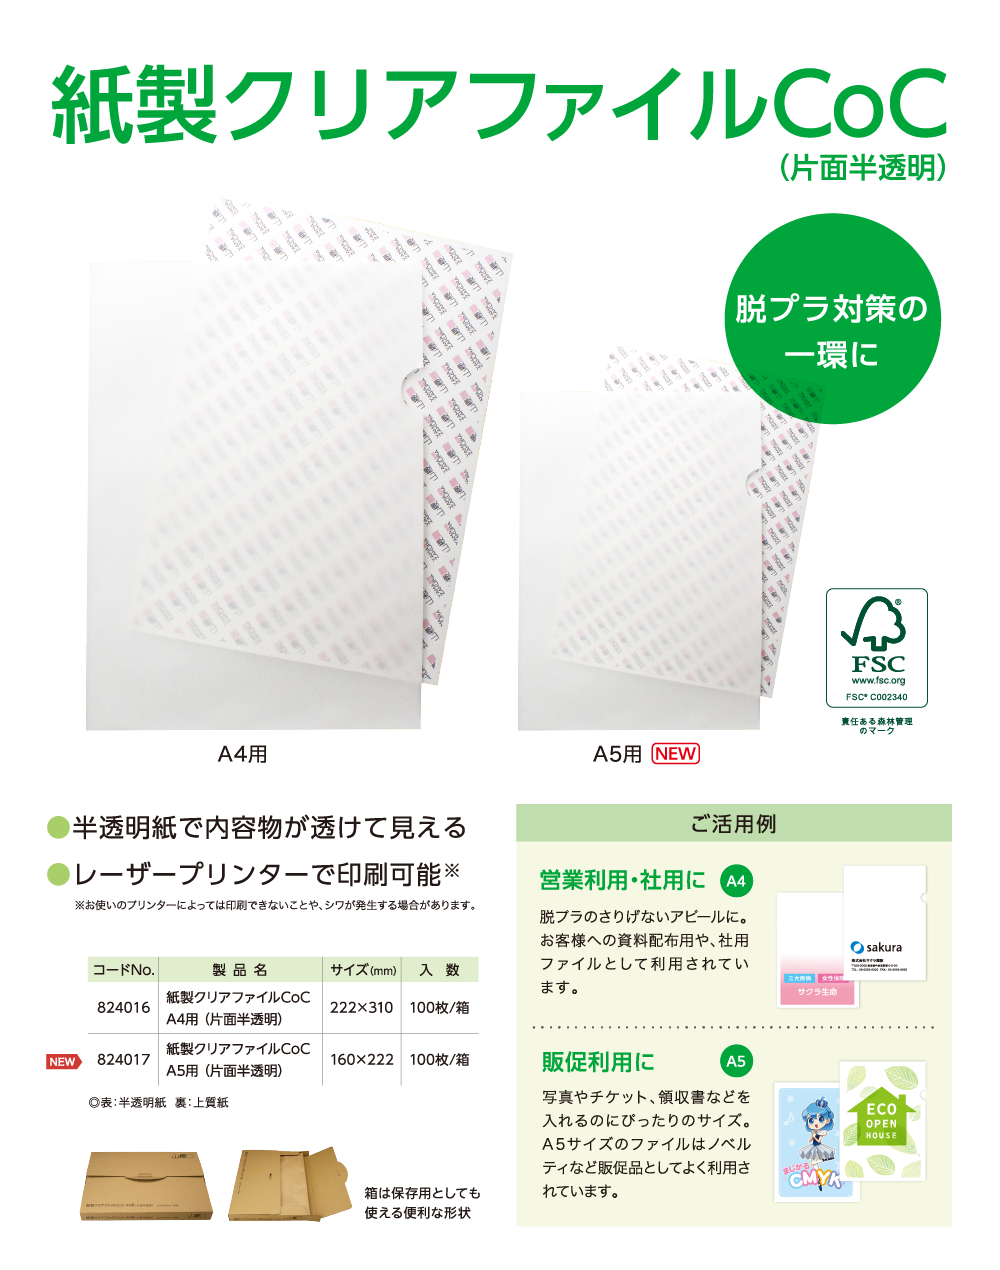 SAKURA Webオフィス 山櫻オンラインショップ紙製クリアファイルCoC A4用: